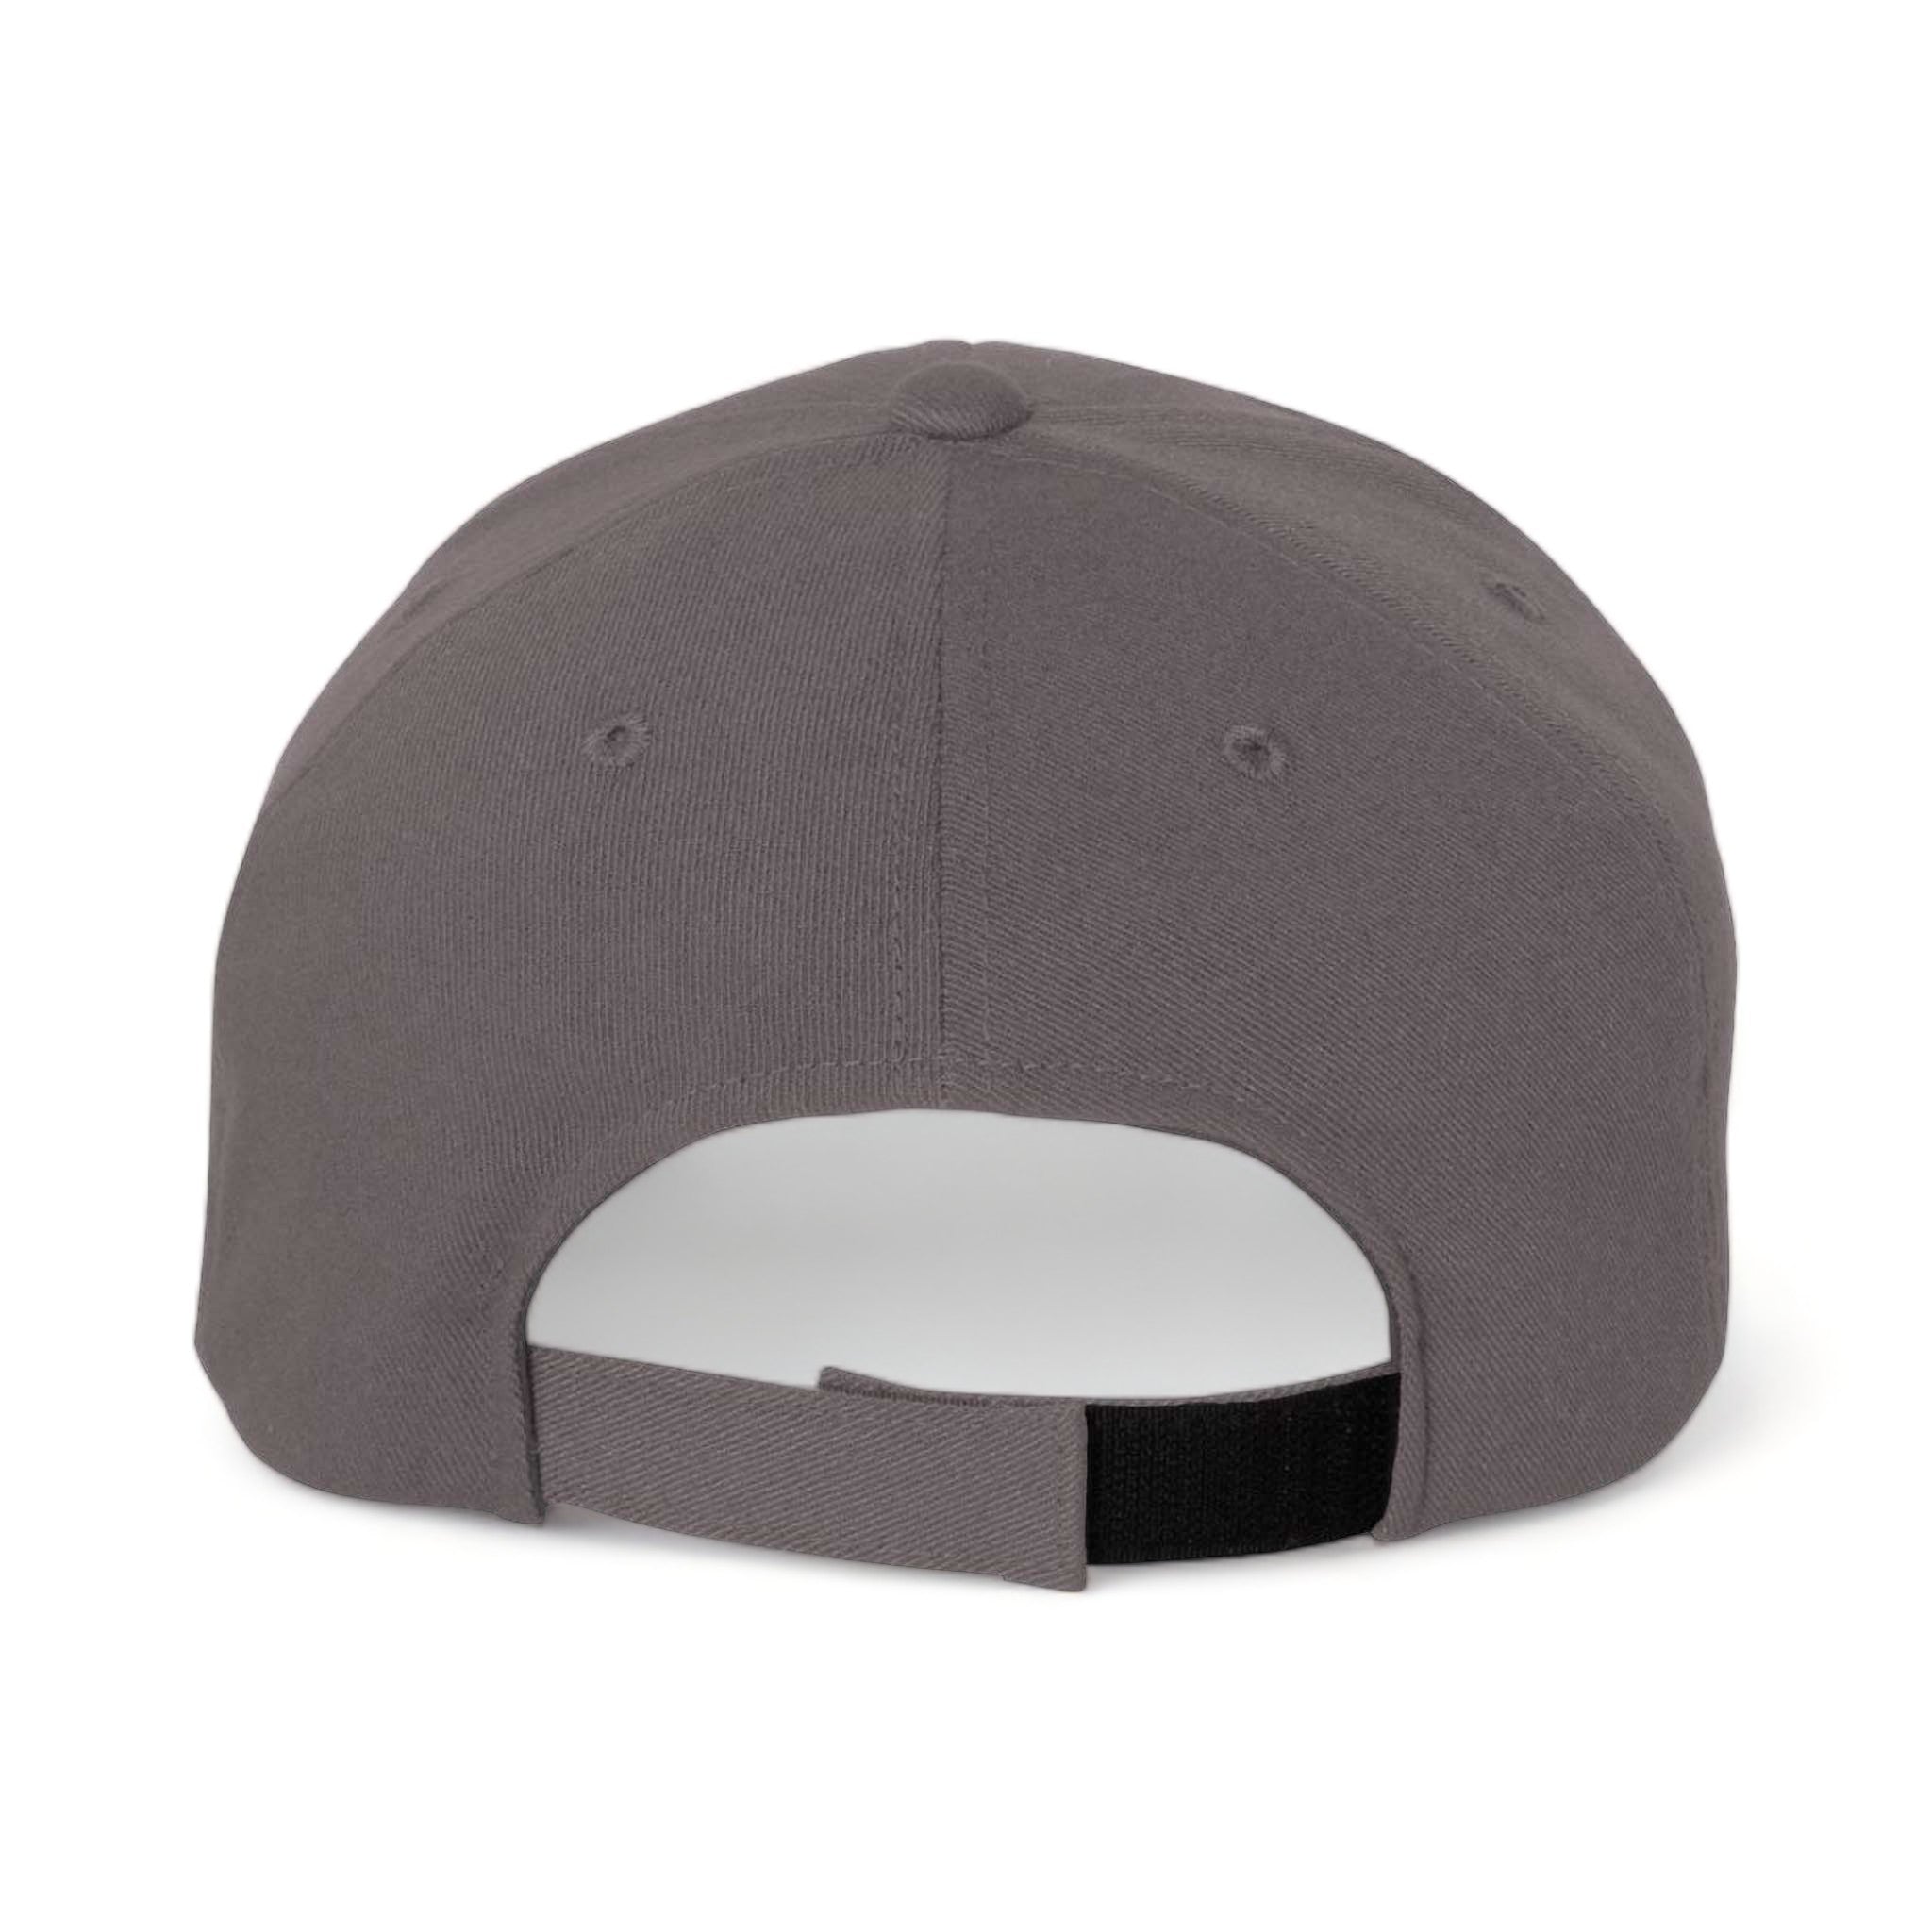 Back view of Flexfit 110C custom hat in grey